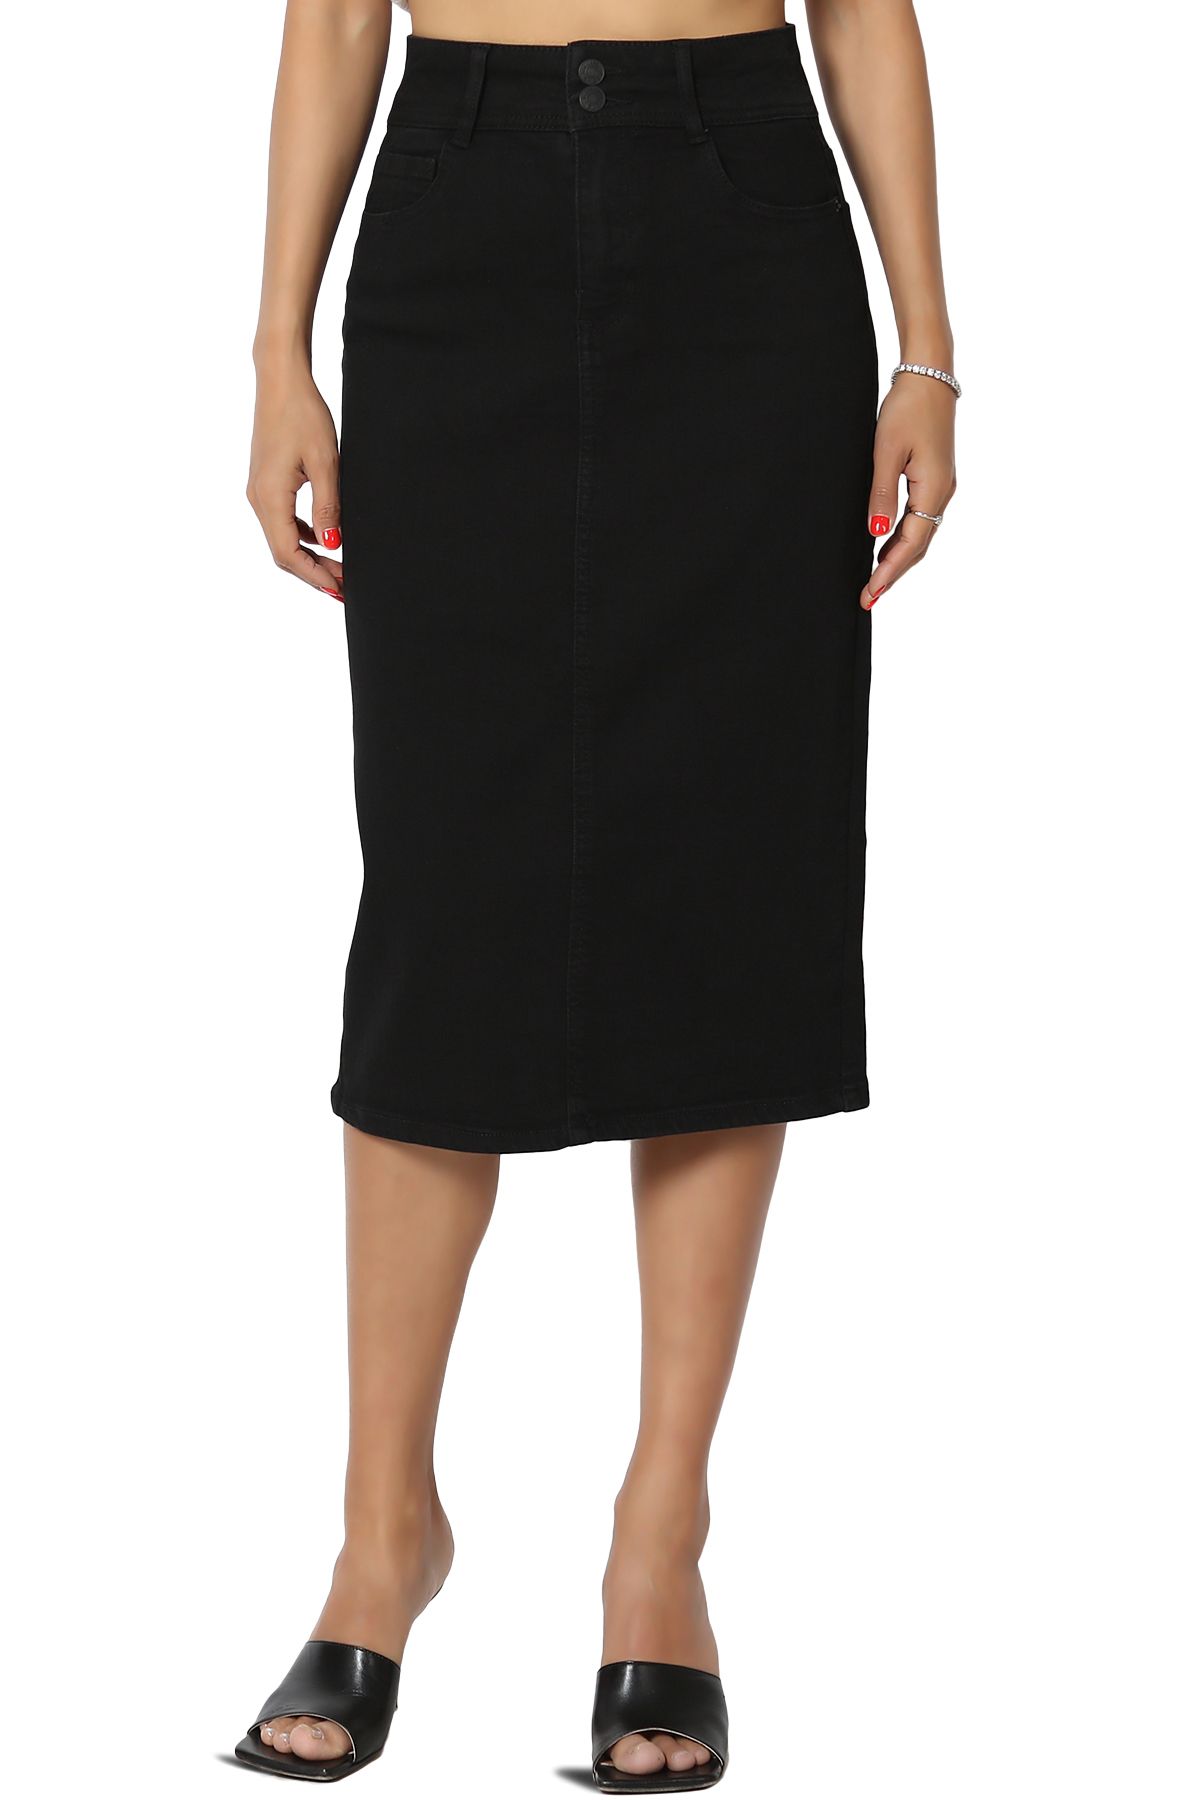 TheMogan Women's S~3X Classic High Waist Below Knee Length Slim Pencil Midi Denim Skirt | Walmart (US)